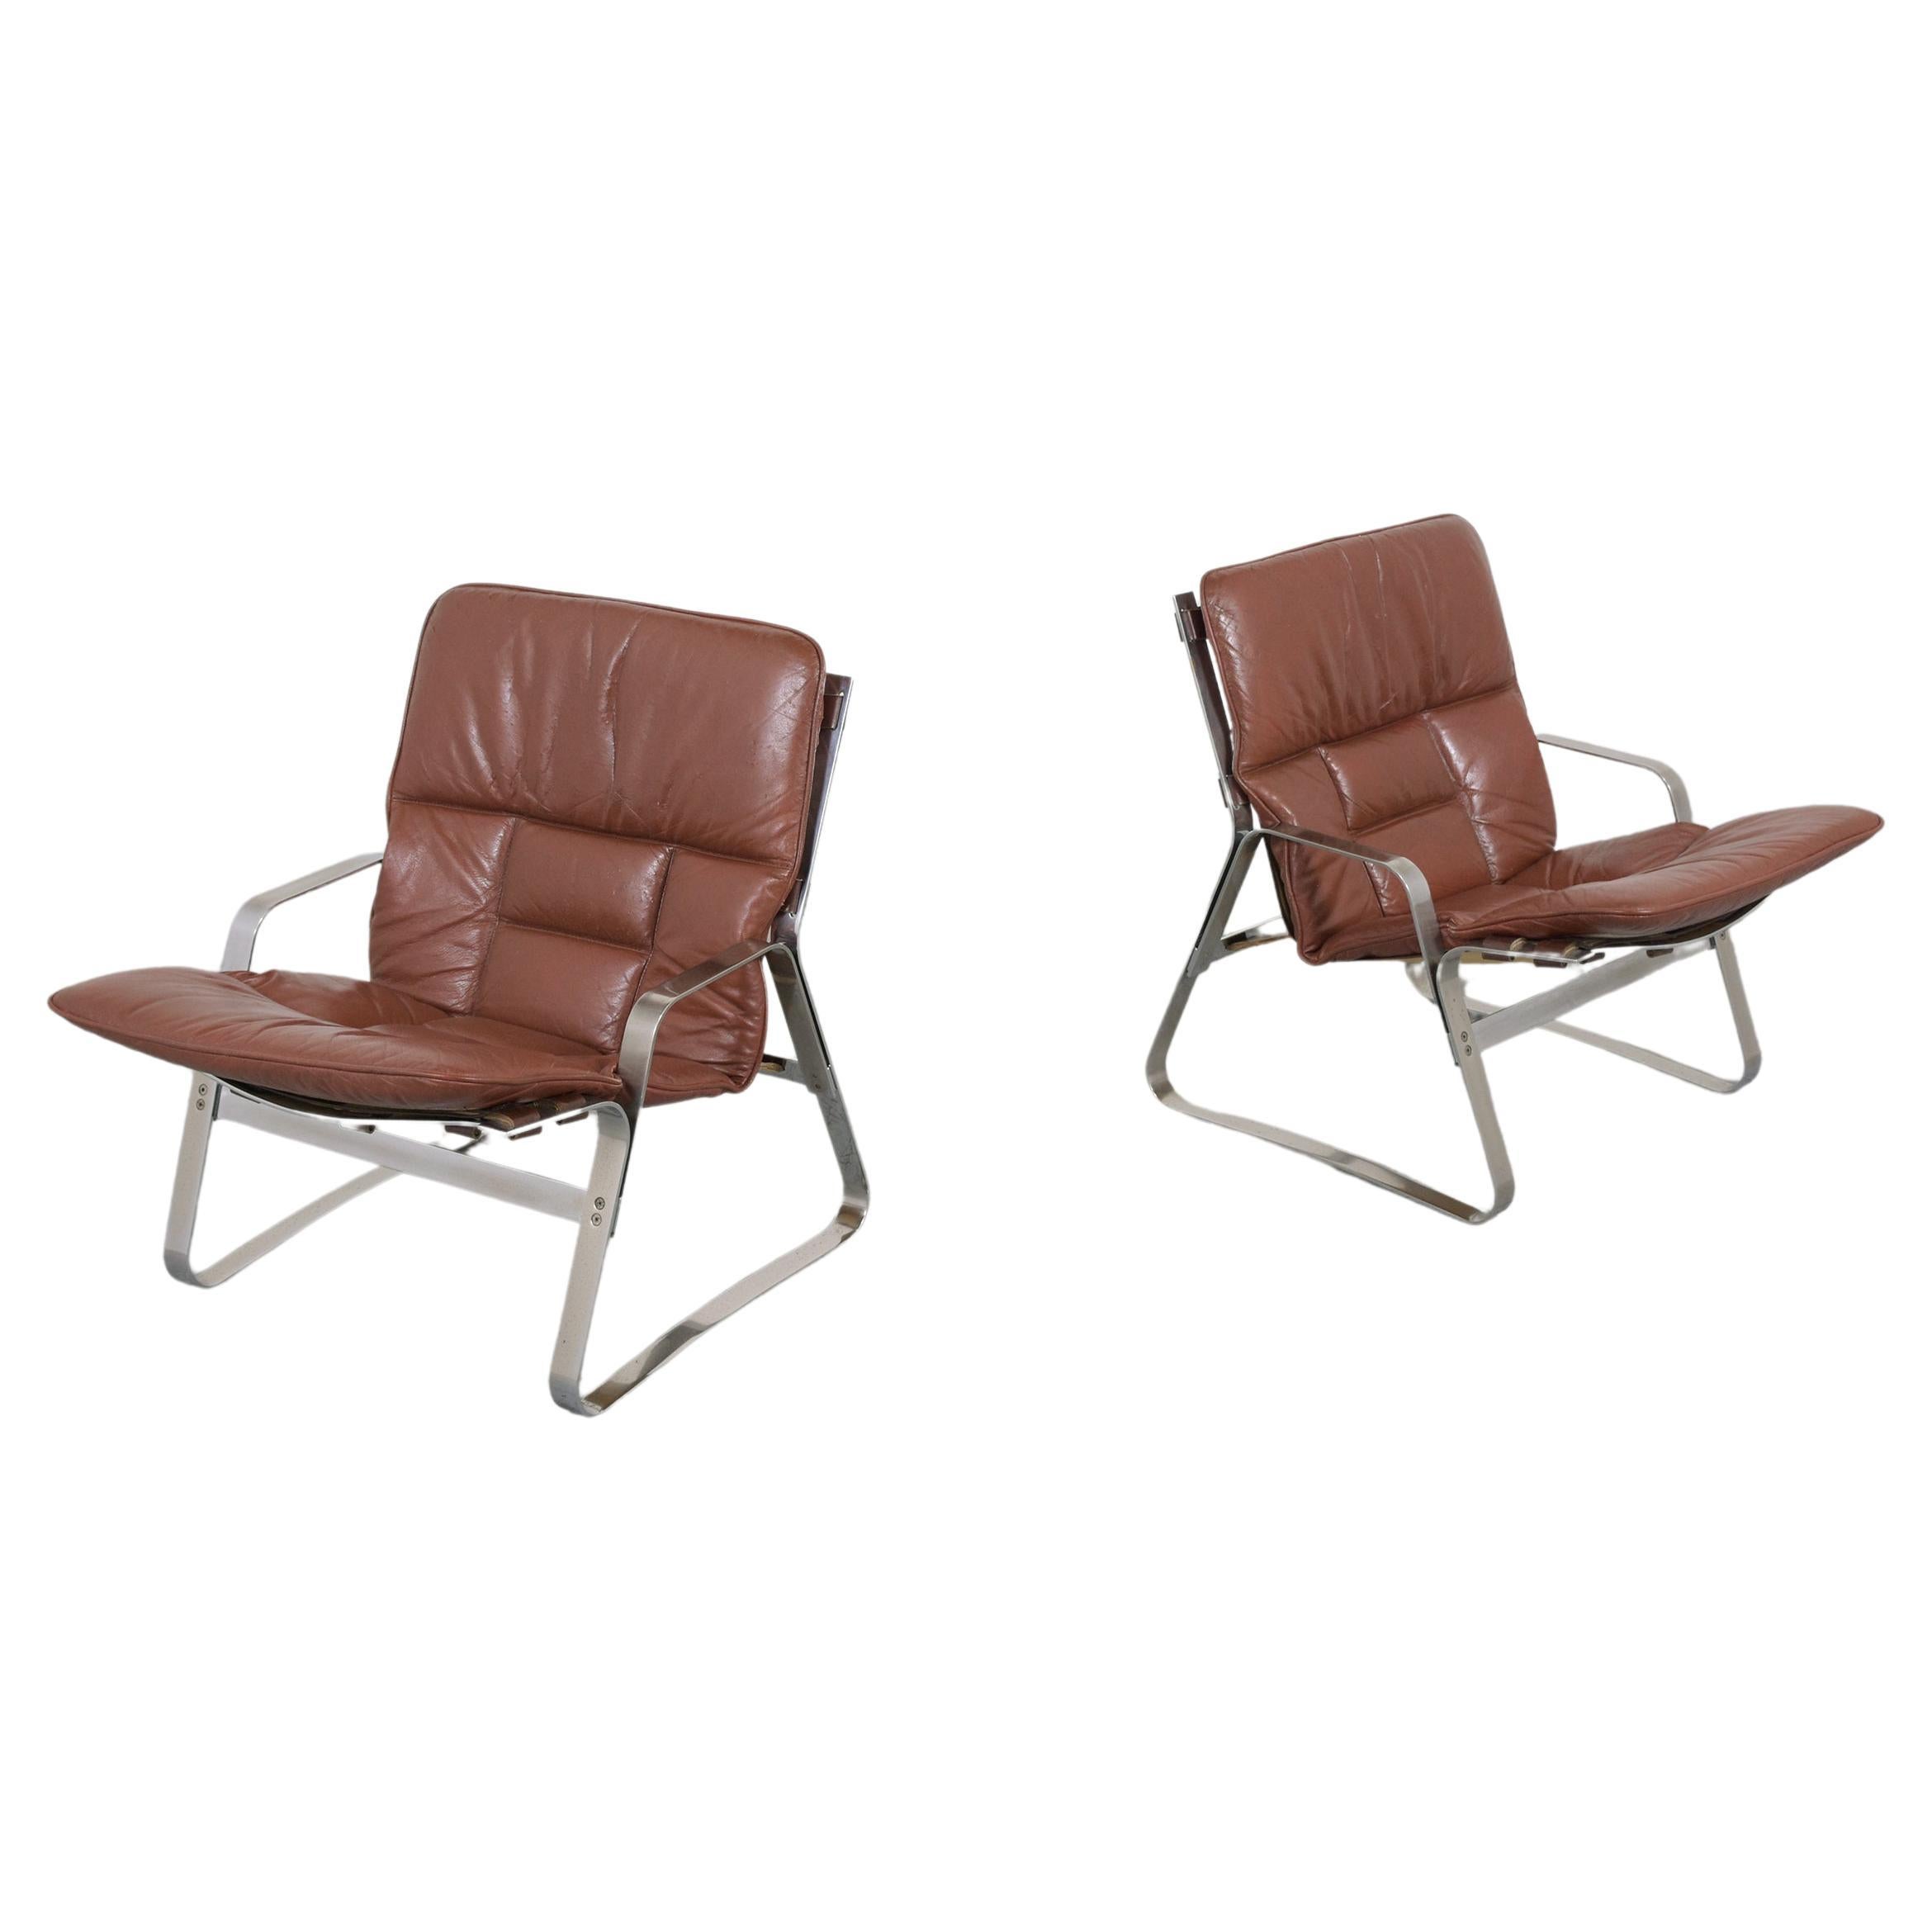 Elsa & Nordahl Solheim's Mid-Century Modern Leather Chrome Lounge Chairs